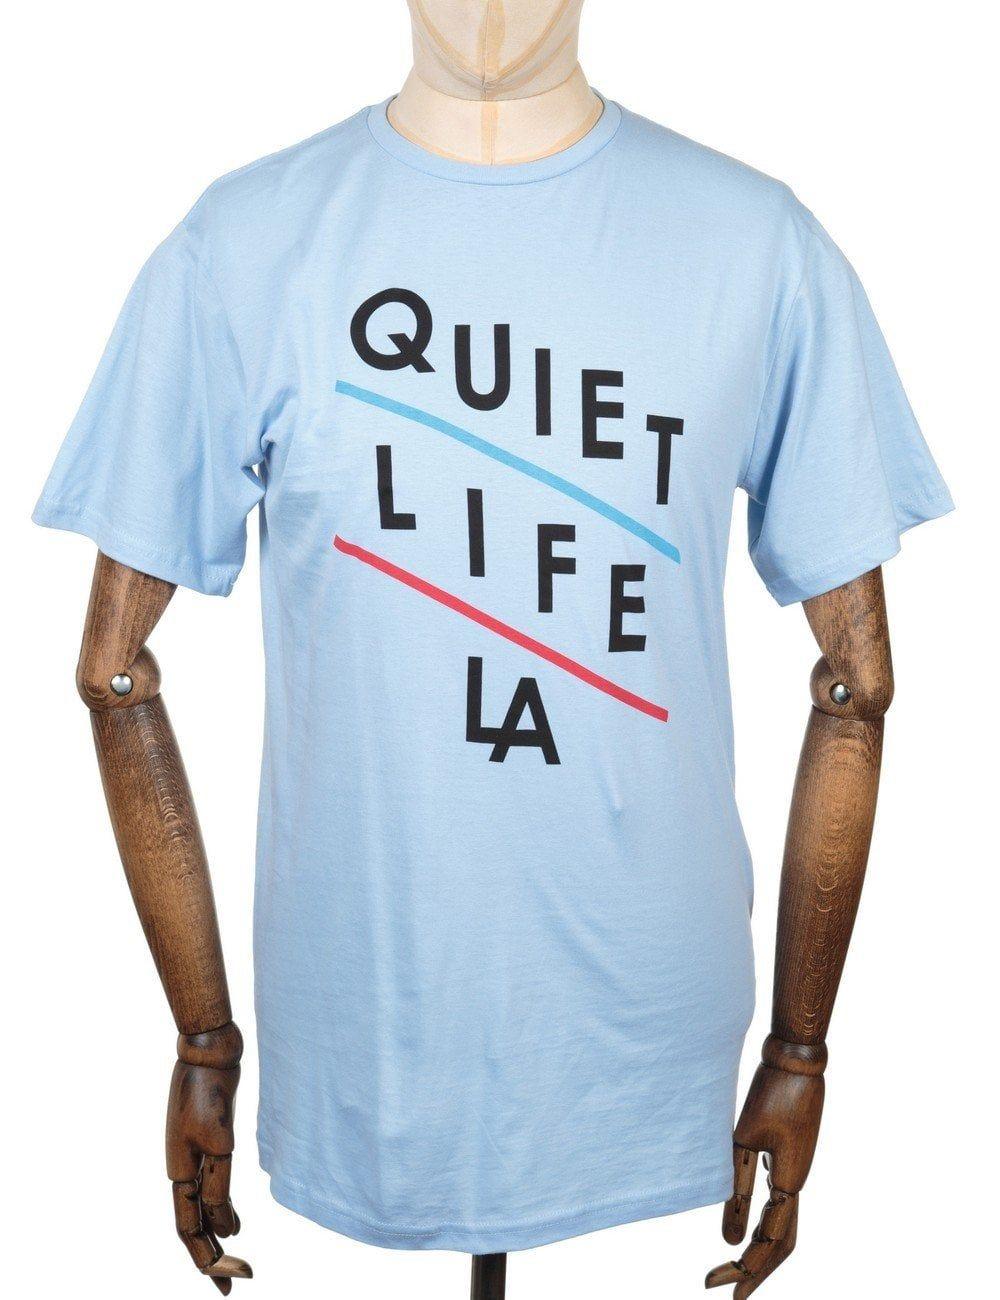 Quiet Life Clothing Logo - The Quiet Life Slant T-shirt - Light Blue - Clothing from Fat Buddha ...